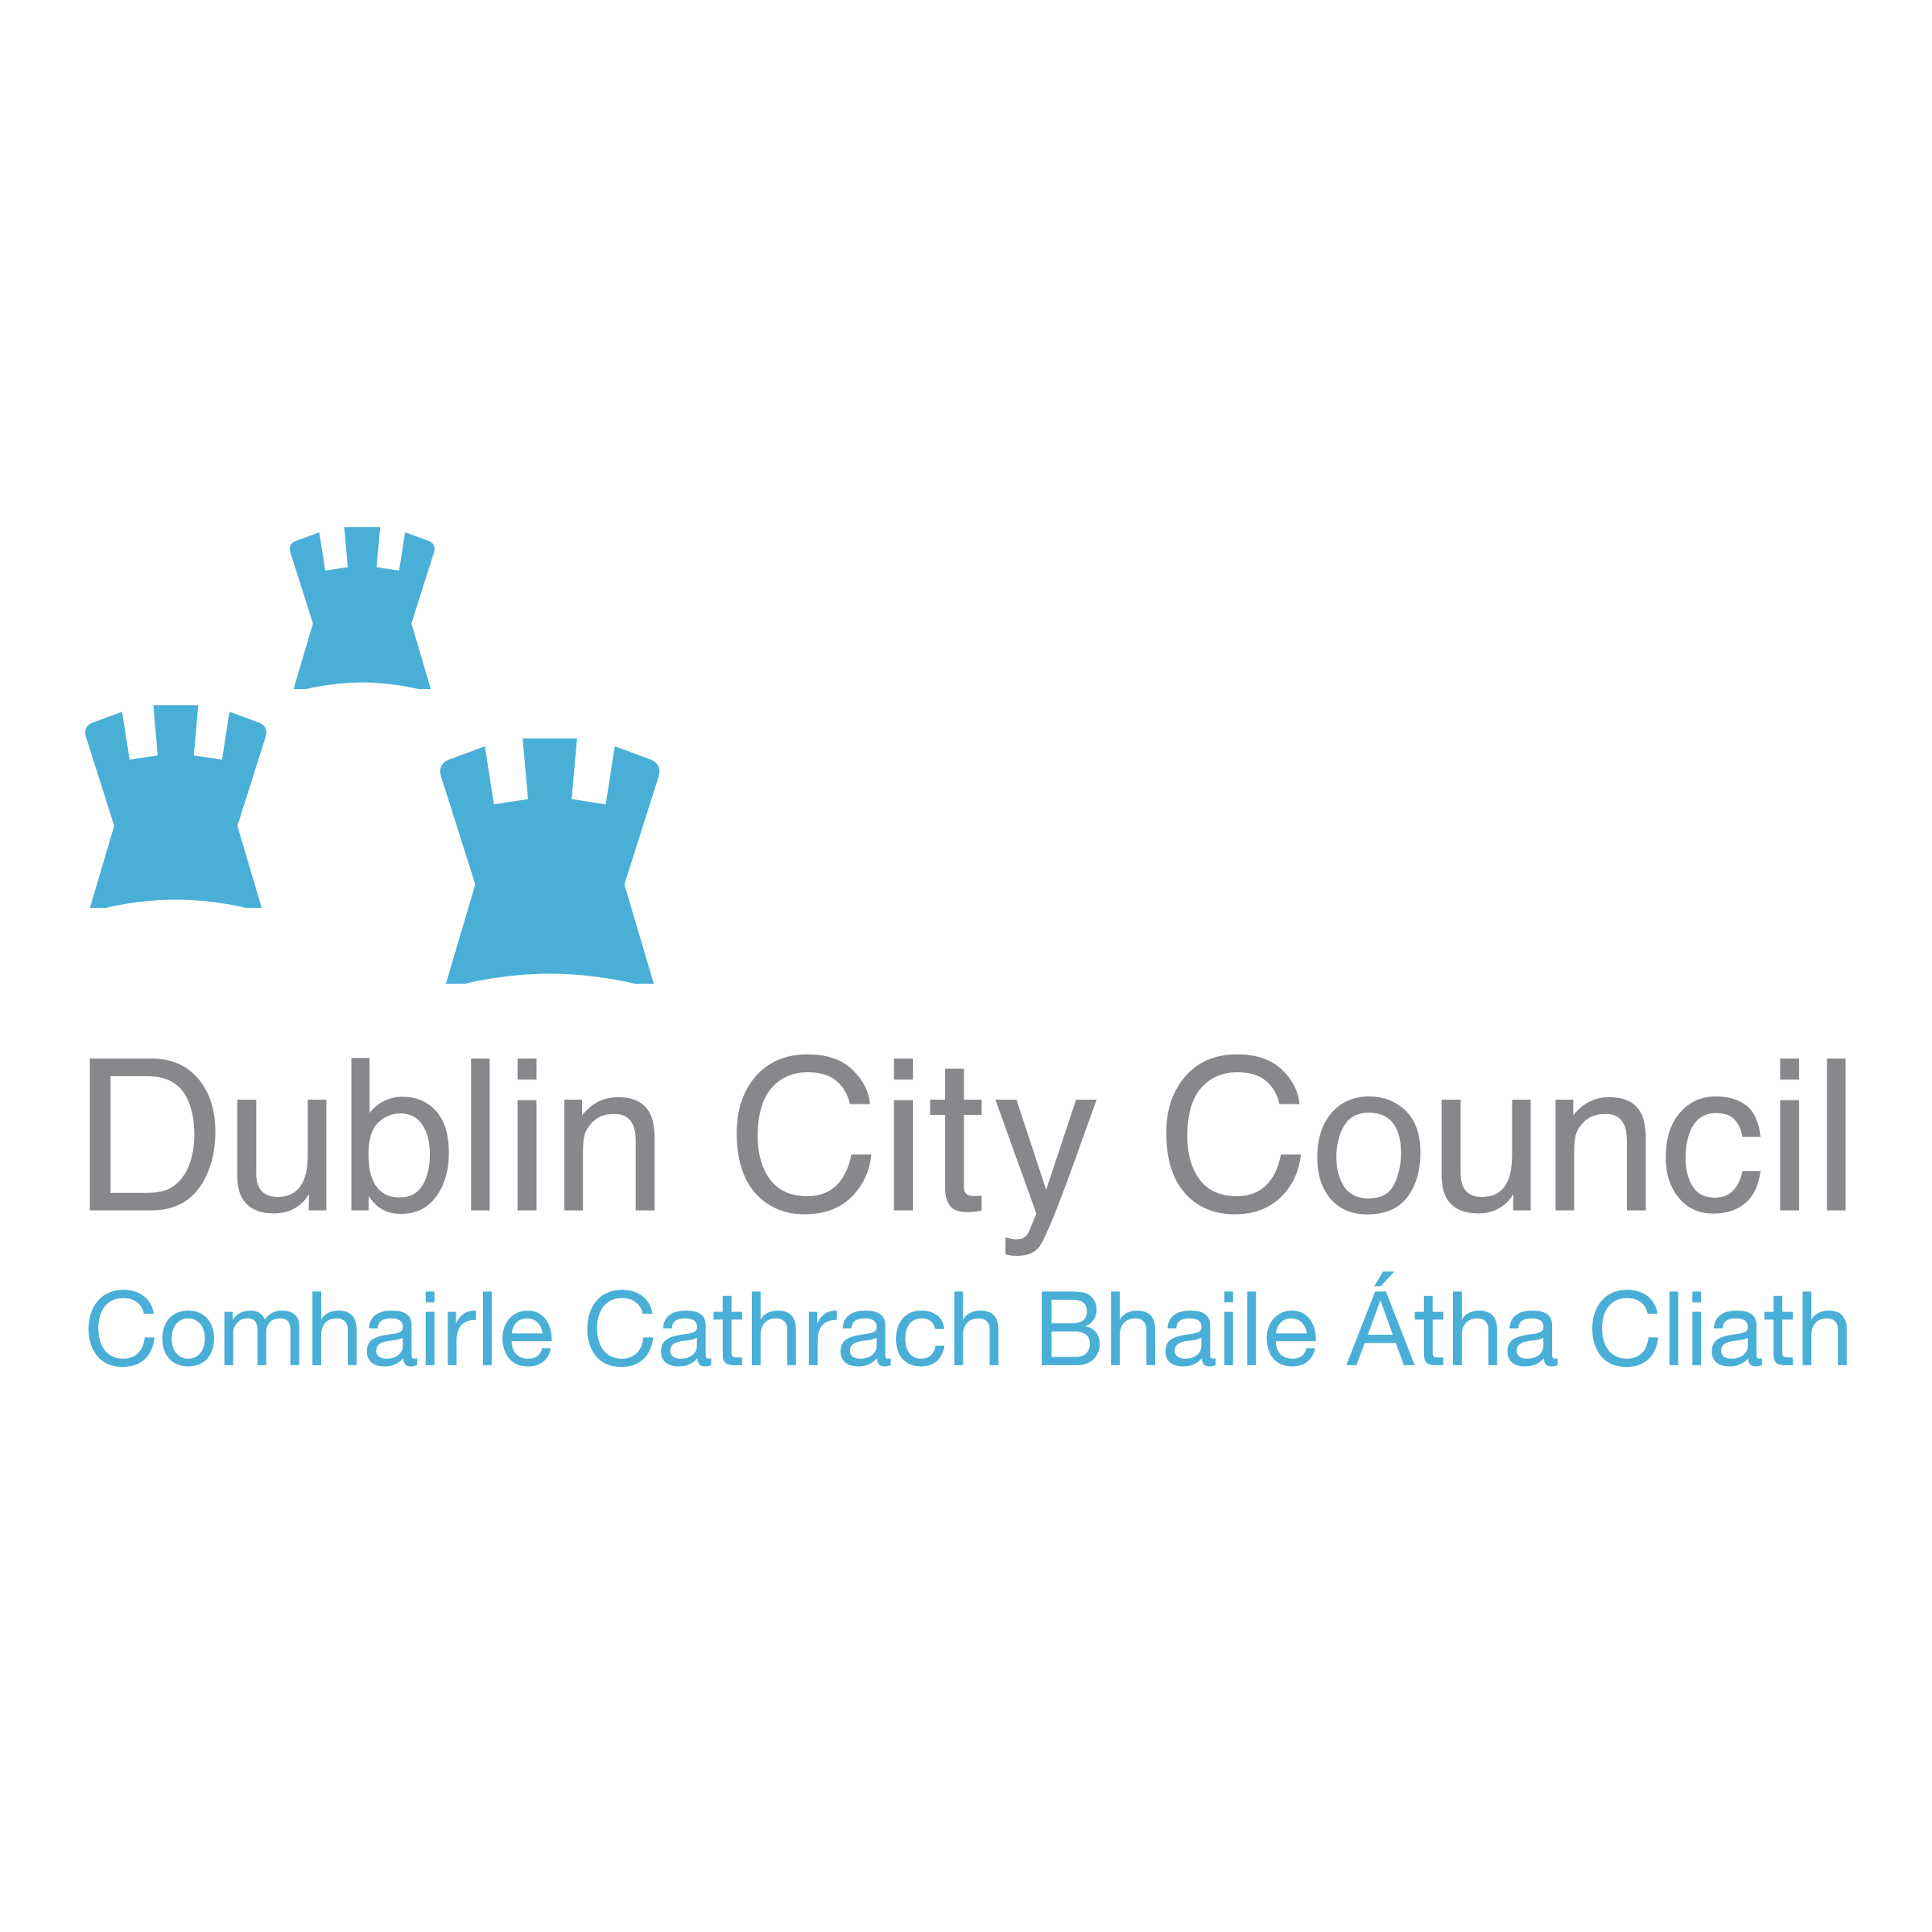 dublin-city-council-1-logo-png-transparent.png